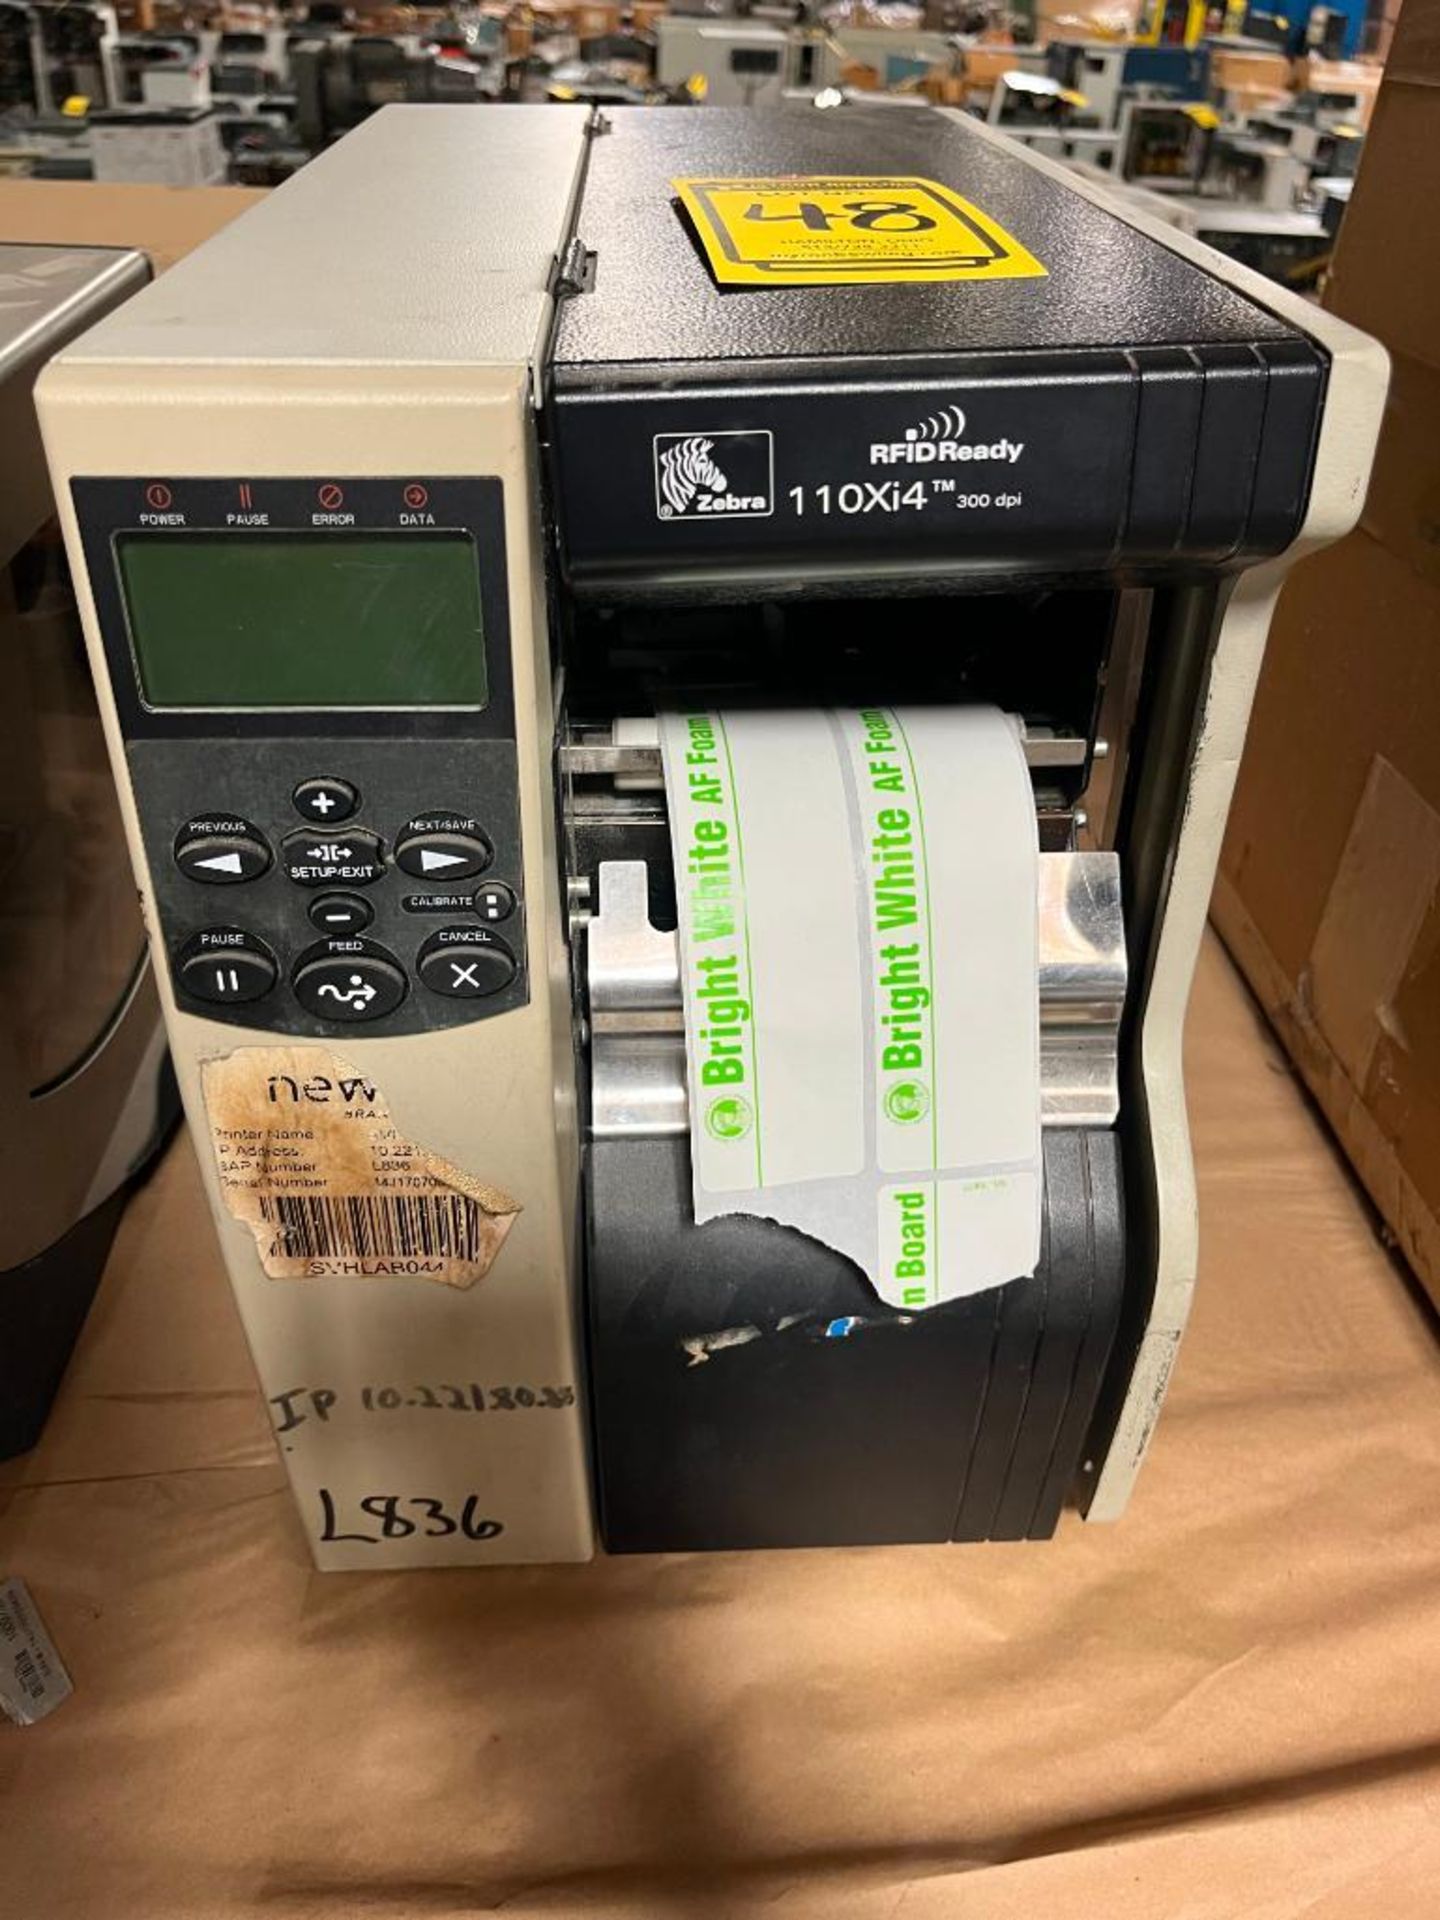 Zebra Printer, Model 110XI4